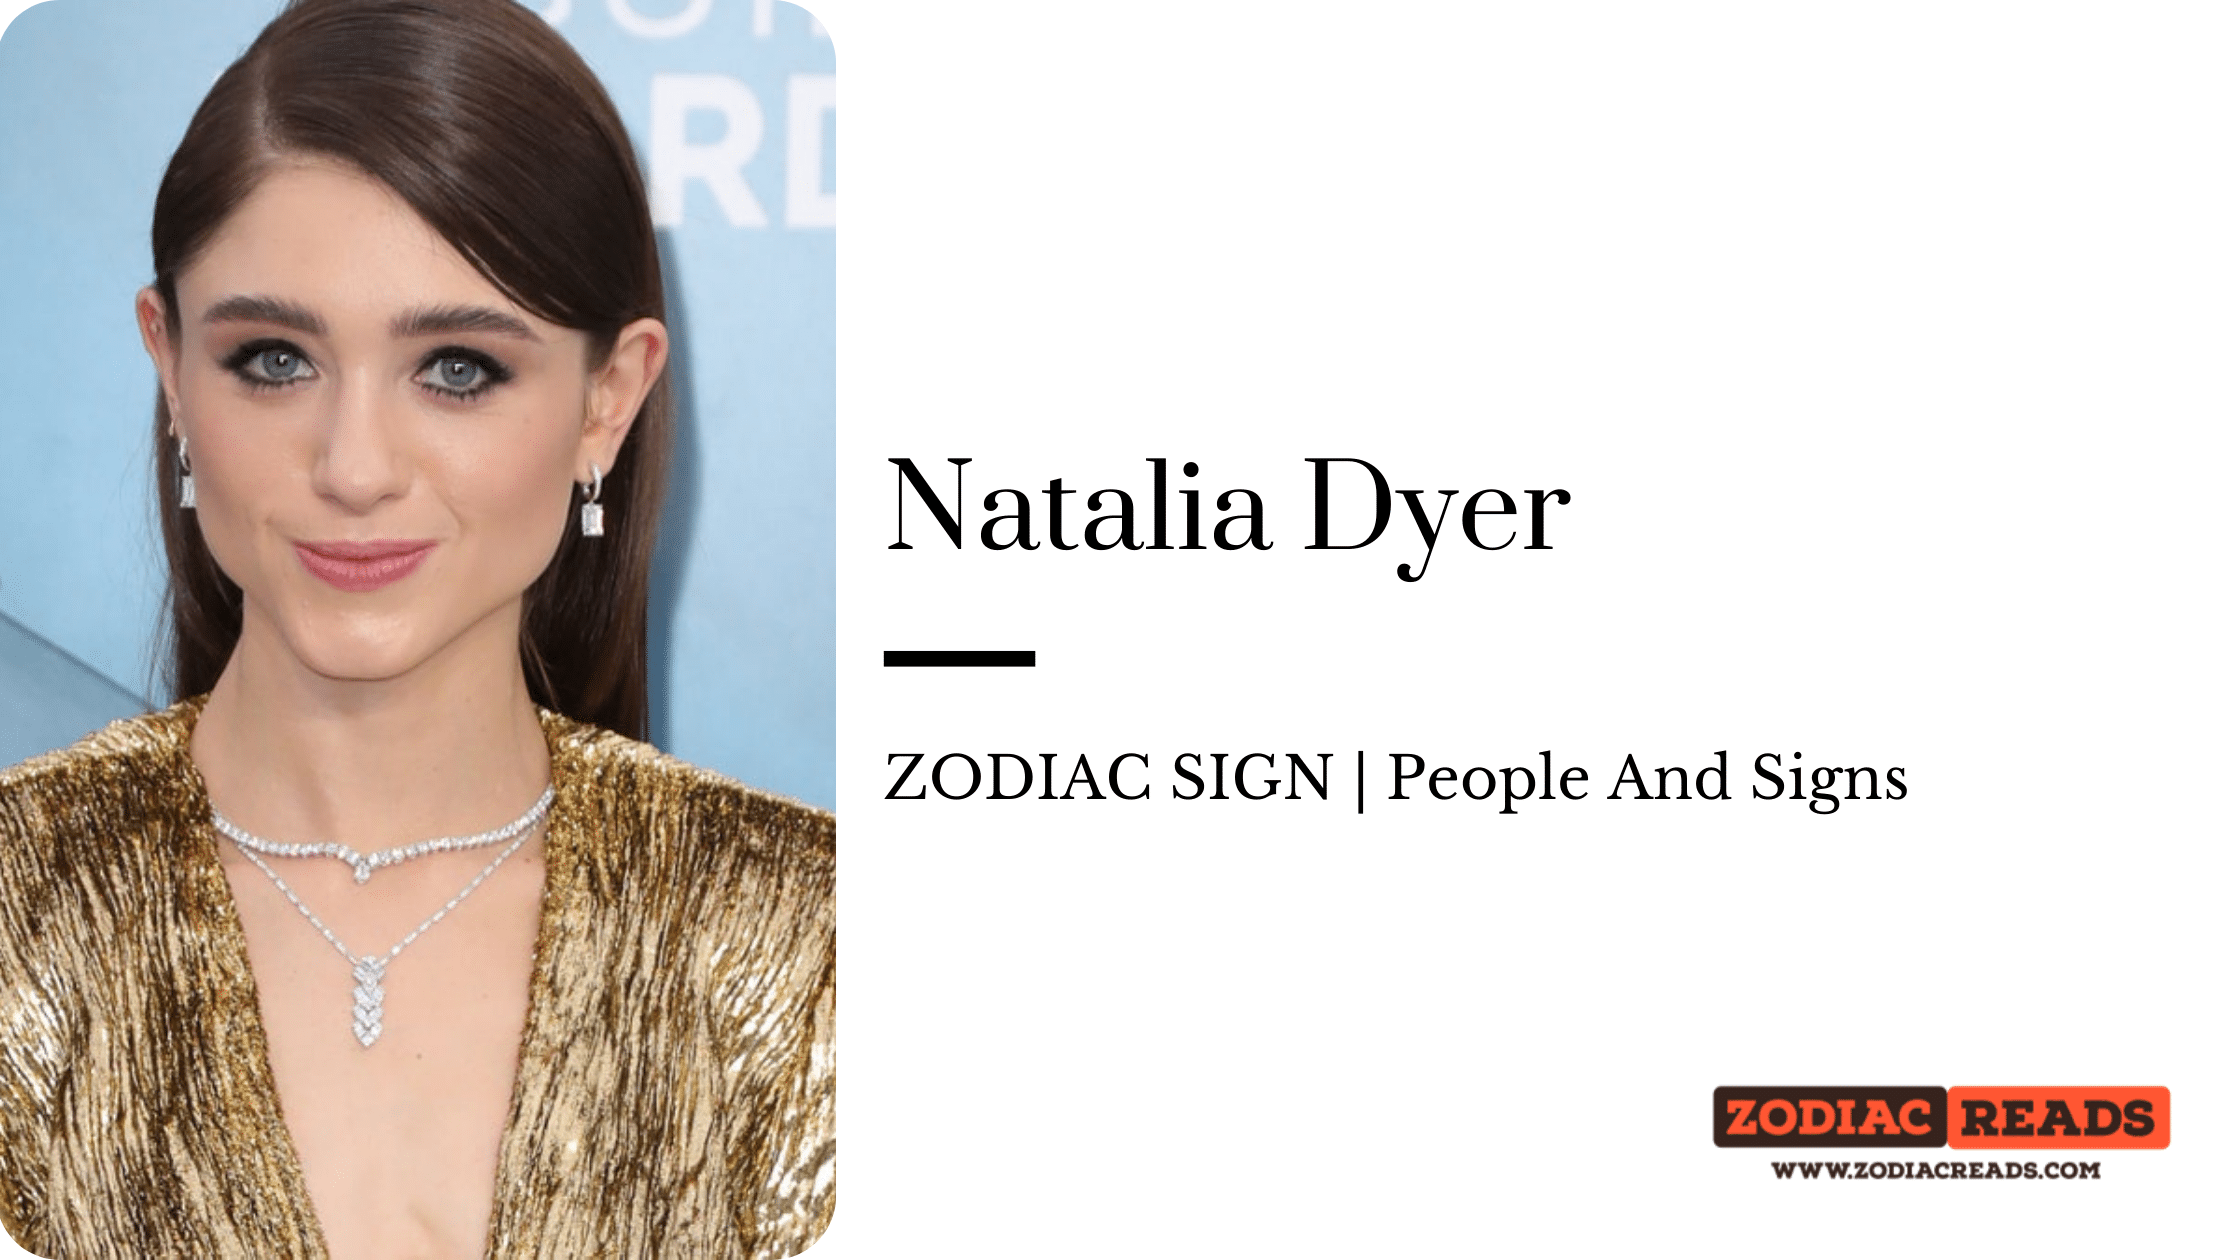 Natalia Dyer zodiac